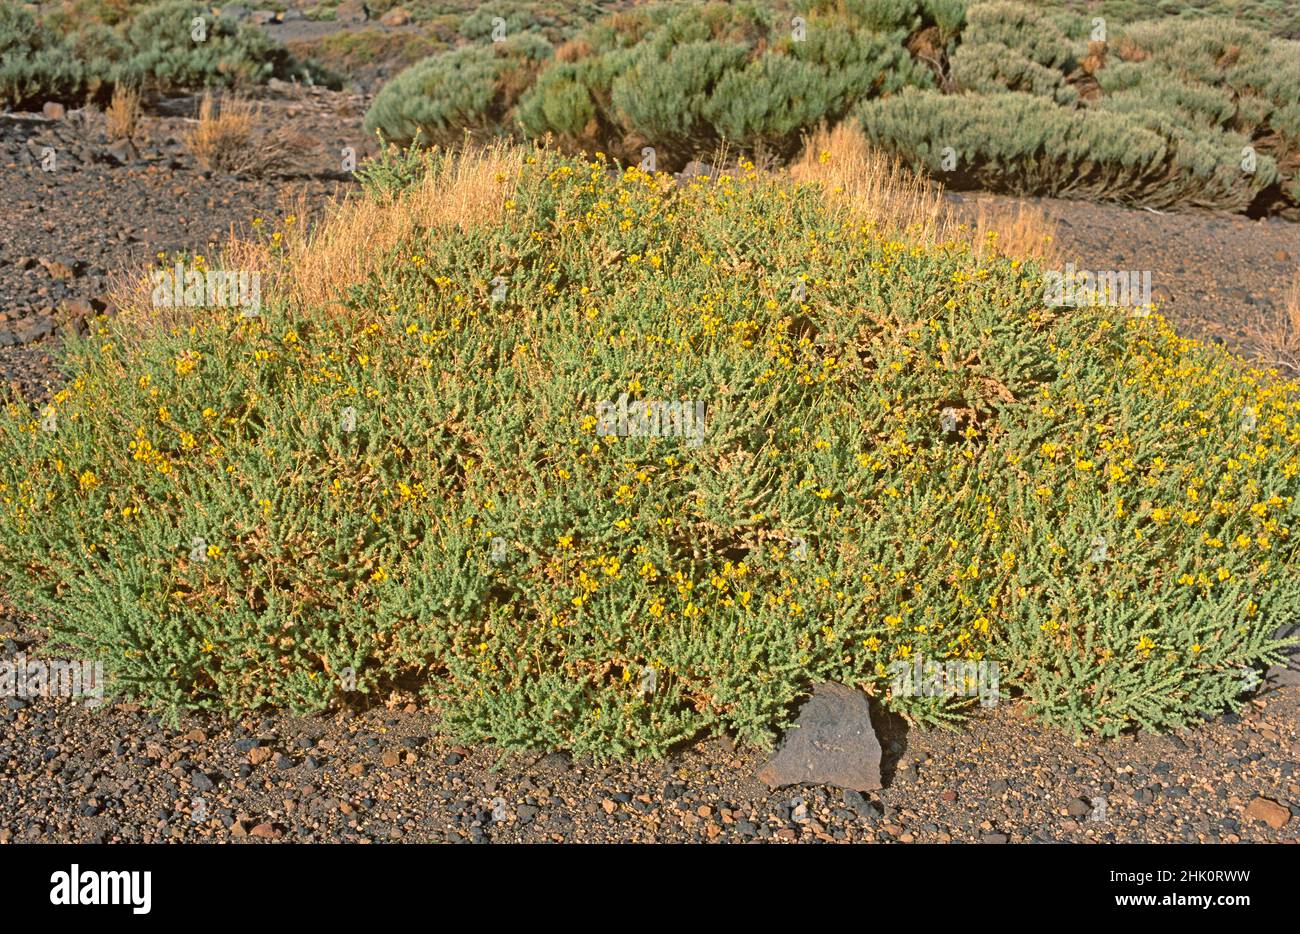 Codeso de cumbre (Adenocarpus viscosus) is a shrub endemic to Tenerife, La Gomera and La Palma. This photo was taken in Canadas del Teide National Stock Photo